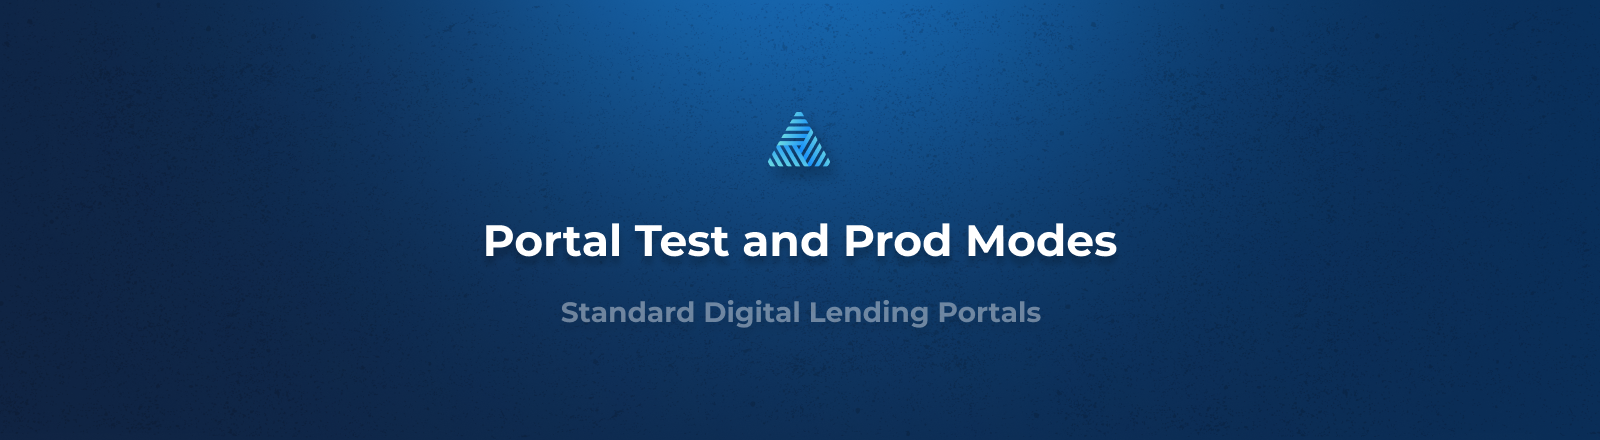 Standard Digital Lending Portals: Now with Test & Prod Modes